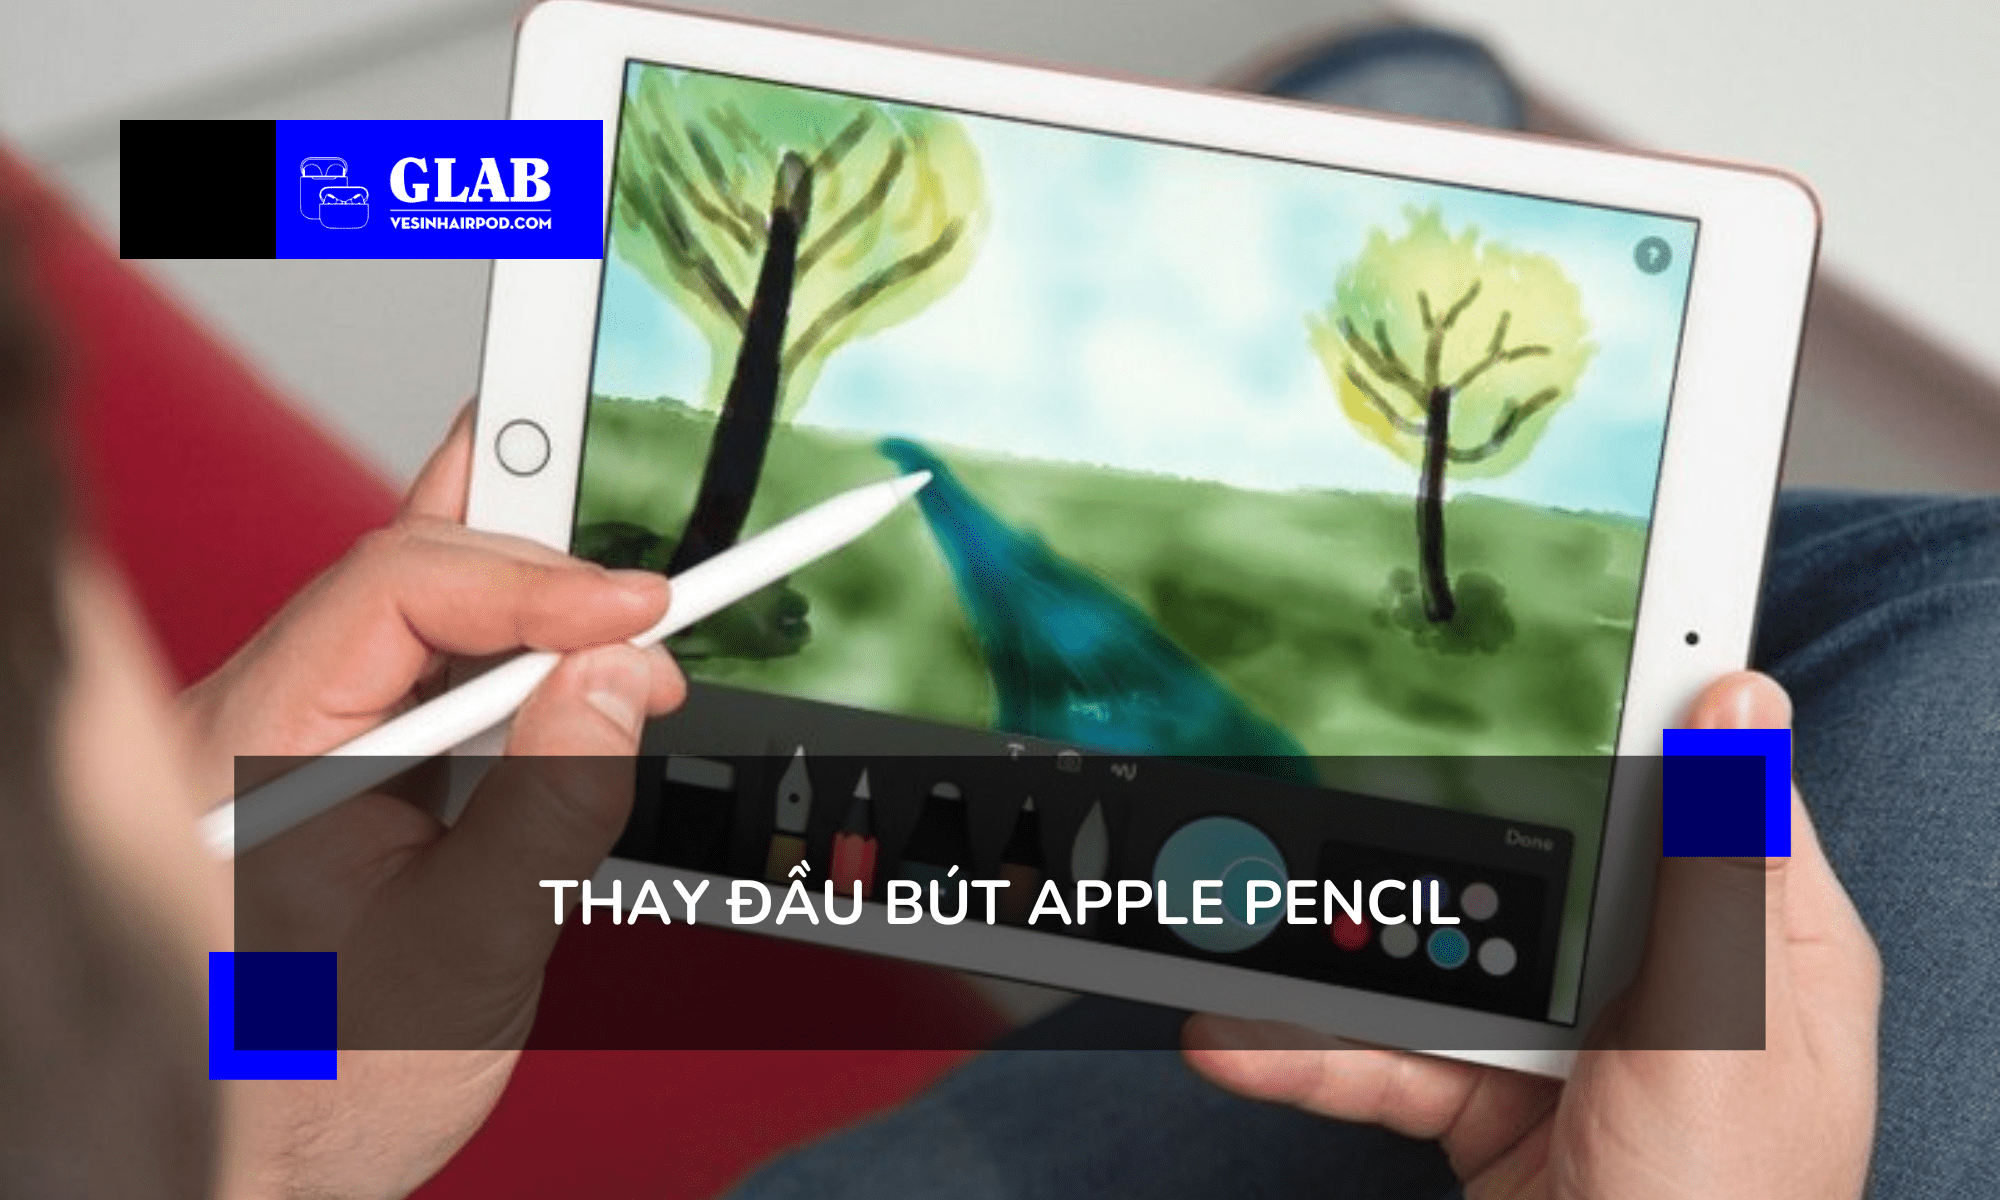 apple-pencil-khong-viet-duoc 